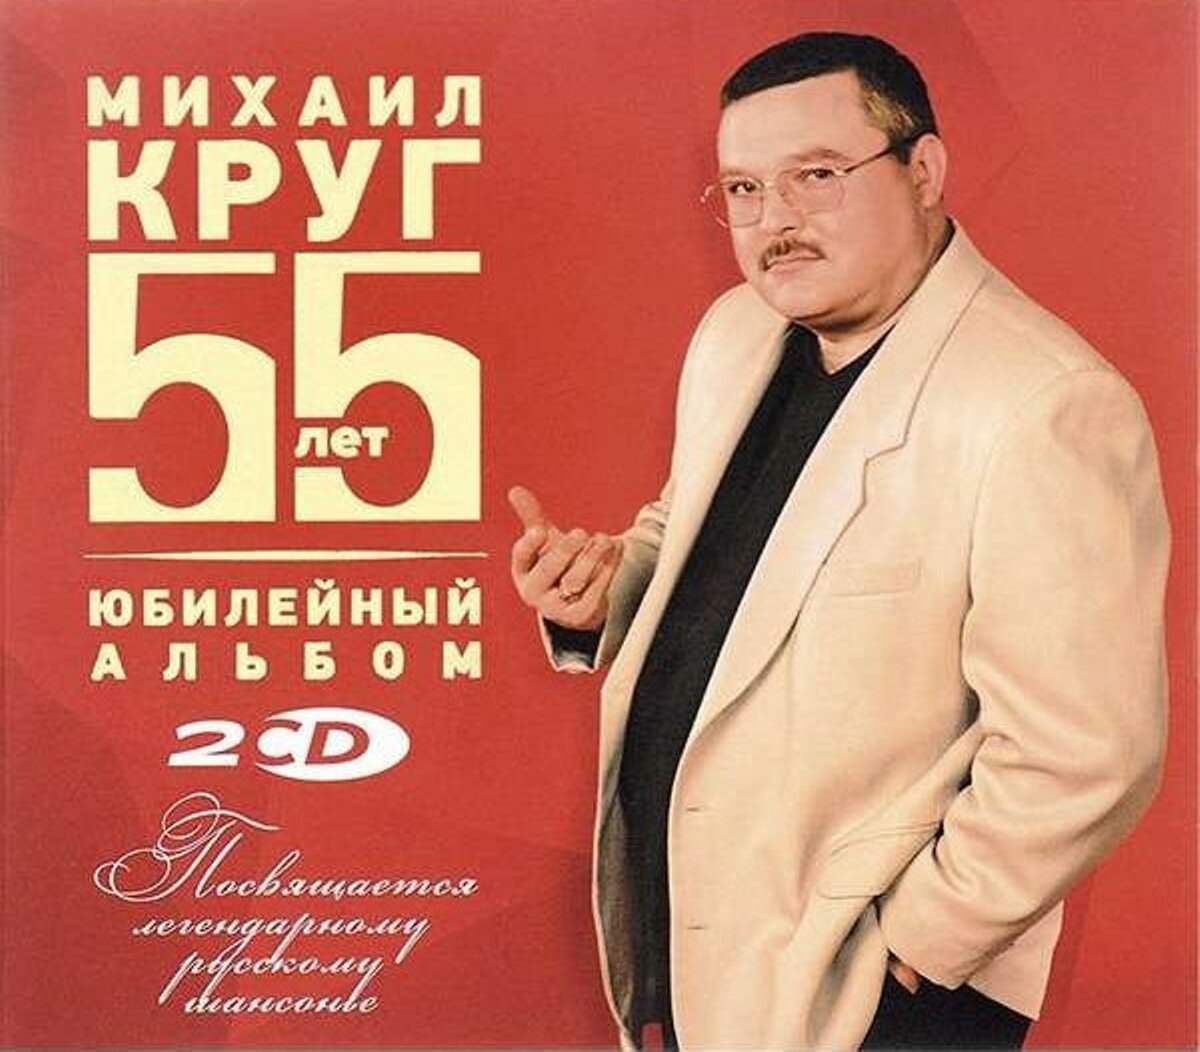 Михаил Круг Юбилейный Альбом 55 лет (2CD) United Music Group